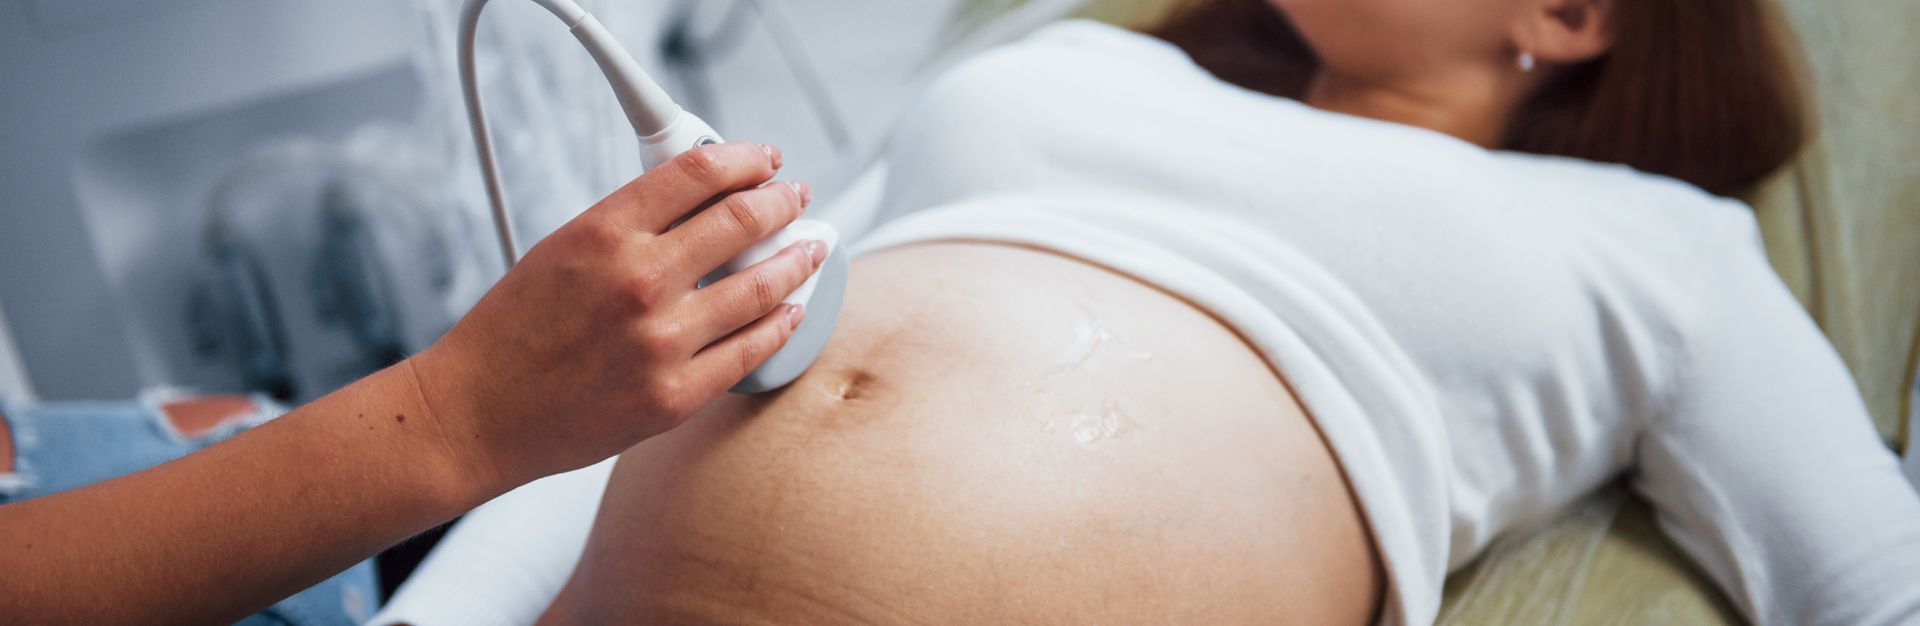 badania prenatalne na nfz